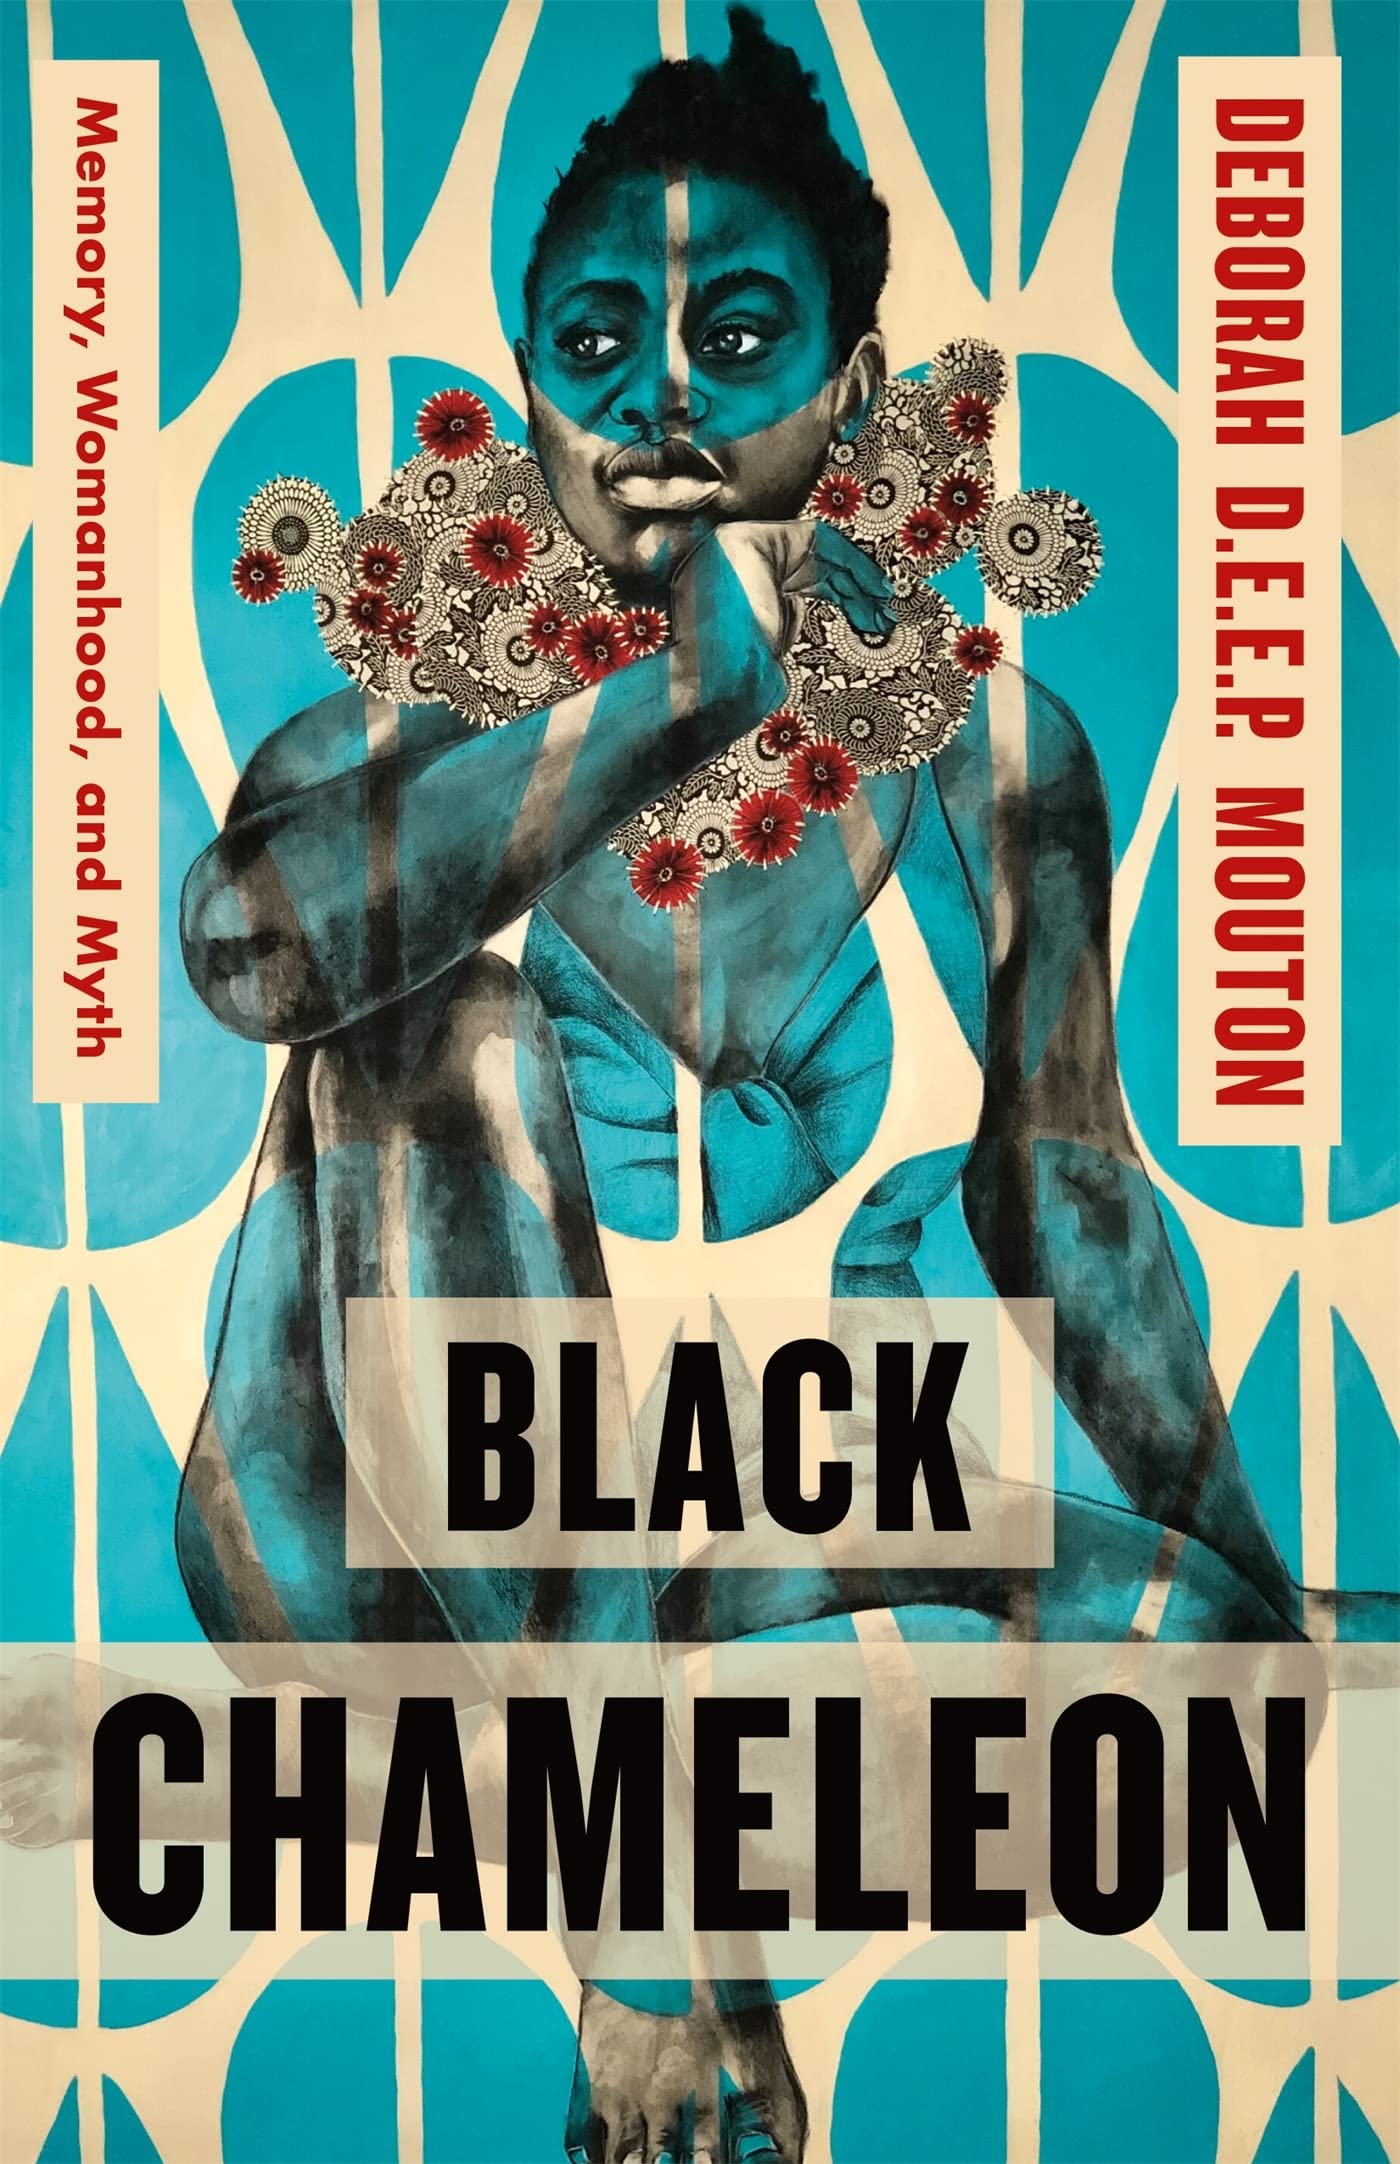 Black Chameleon // Memory, Womanhood, and Myth